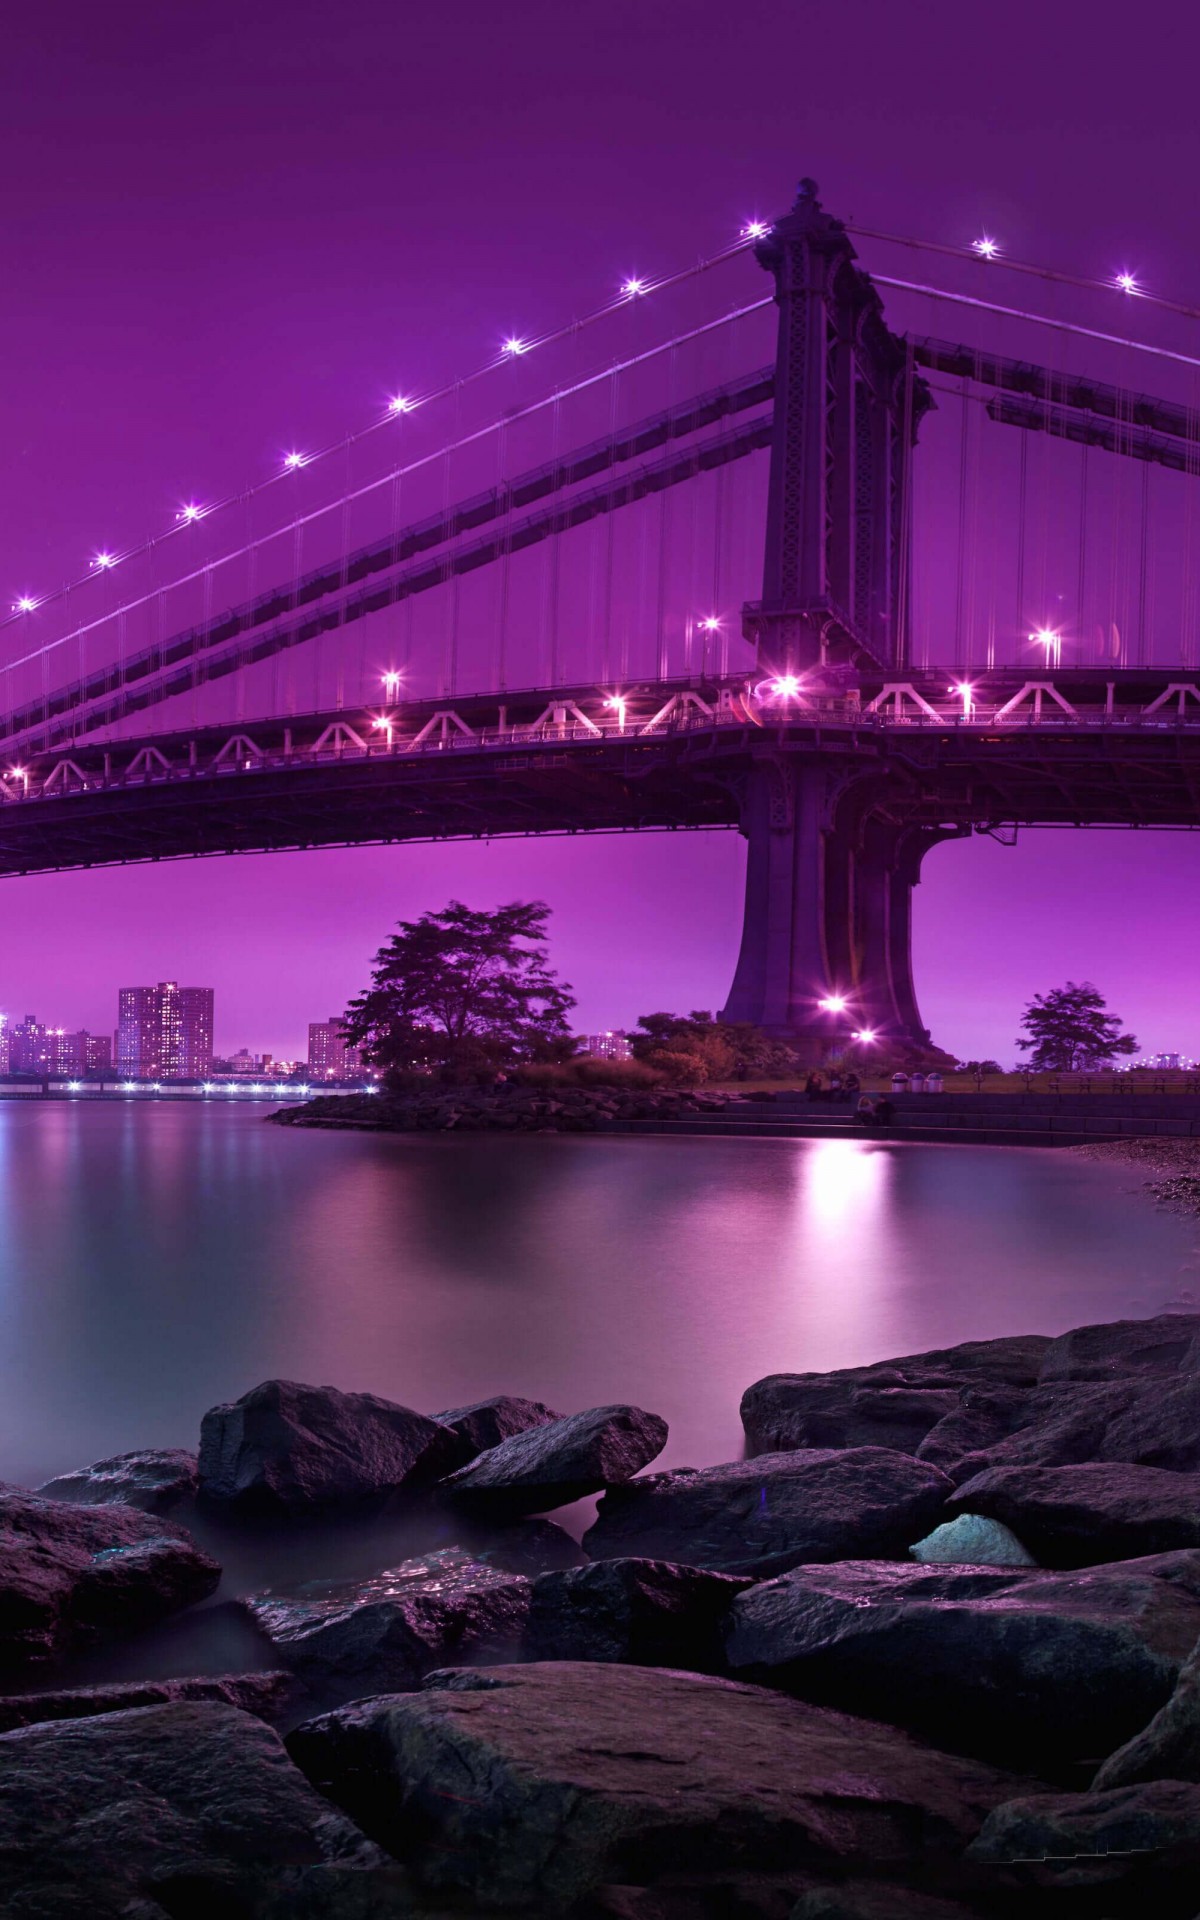 Bridge By Night HD Wallpaper For Kindle Fire HDx HDwallpaper